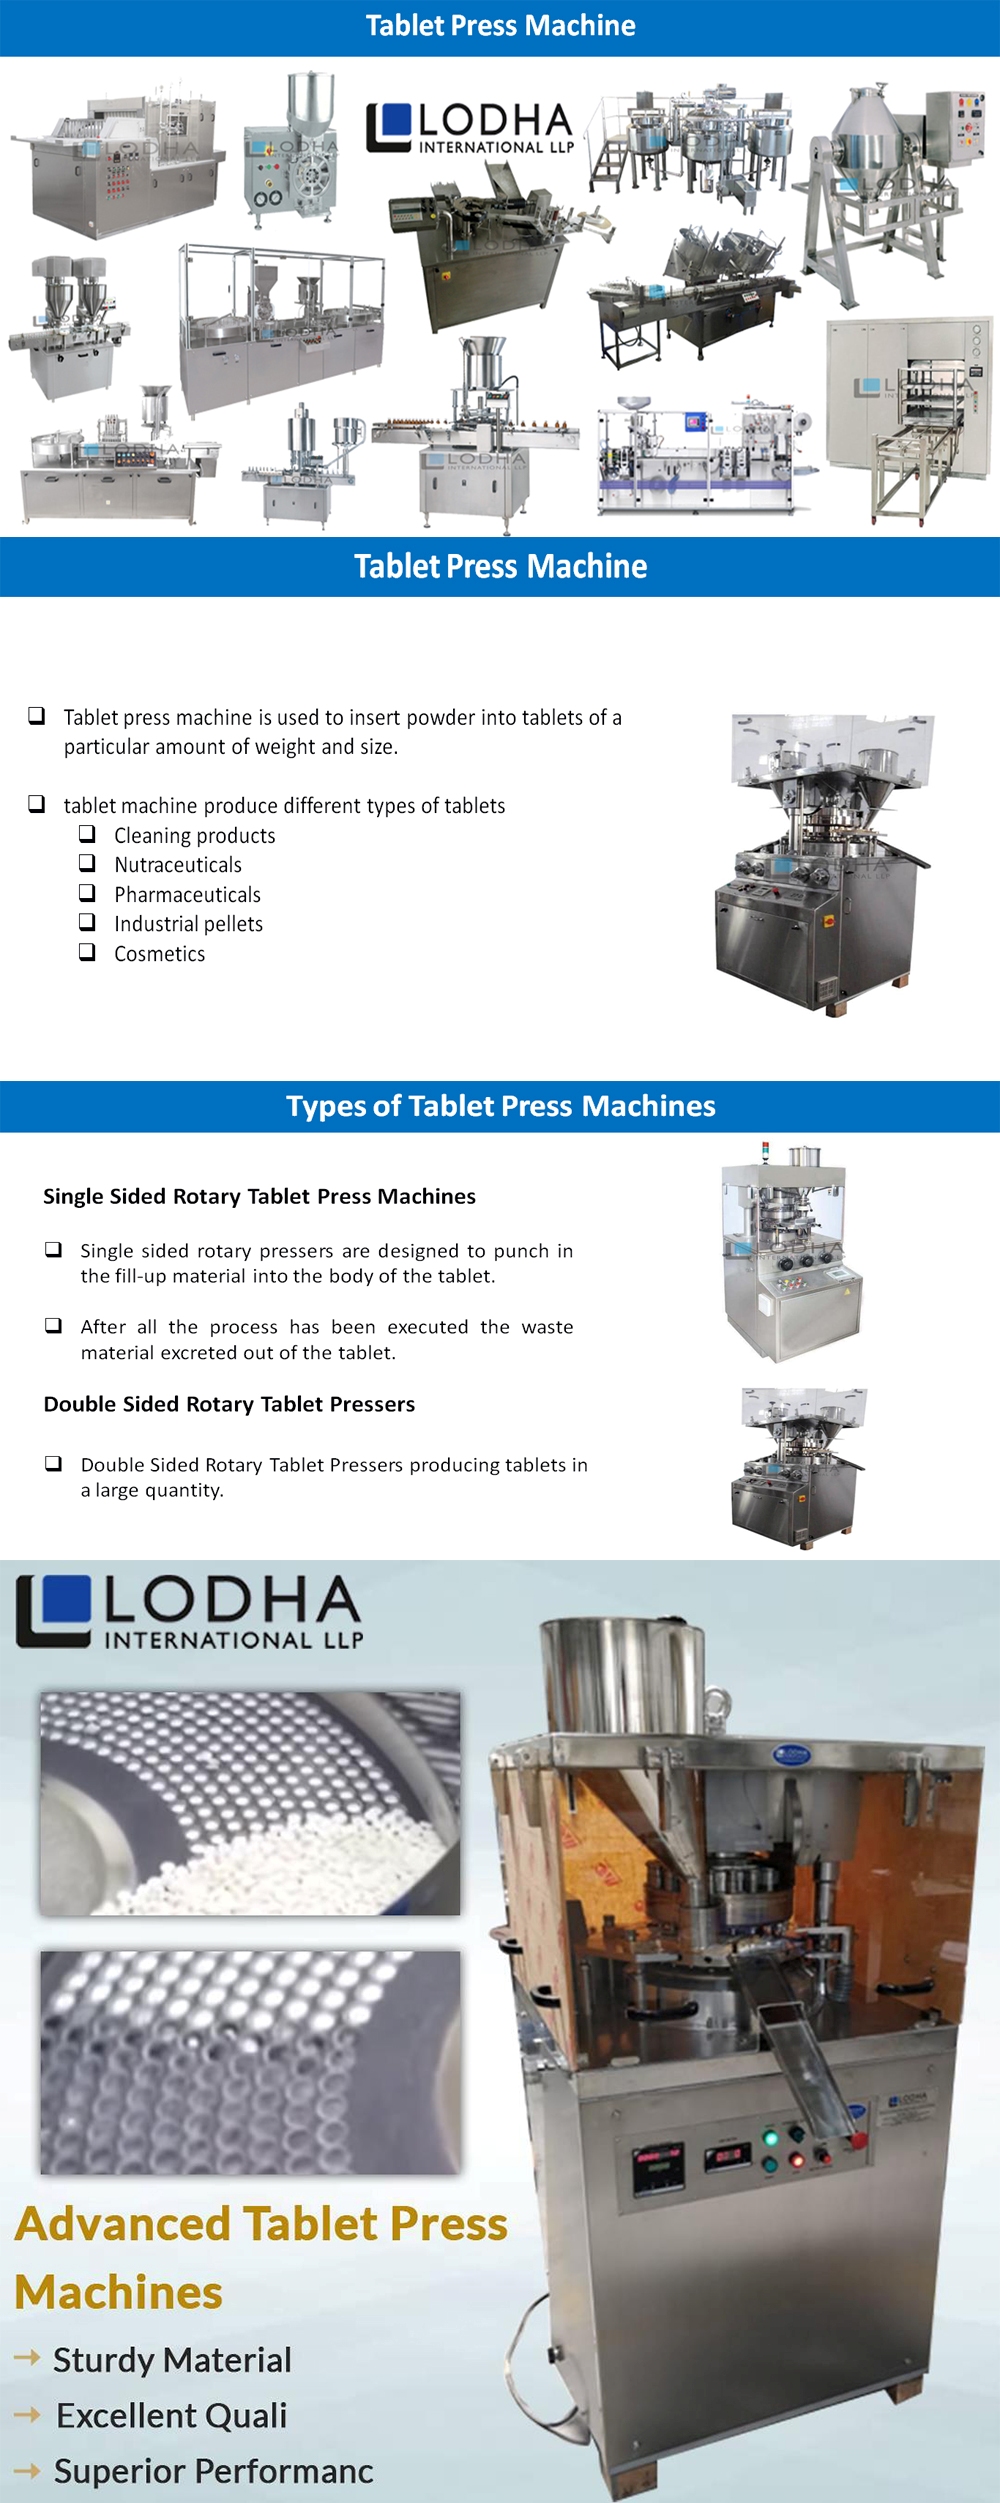 Working Principles of Tablet Press Machine